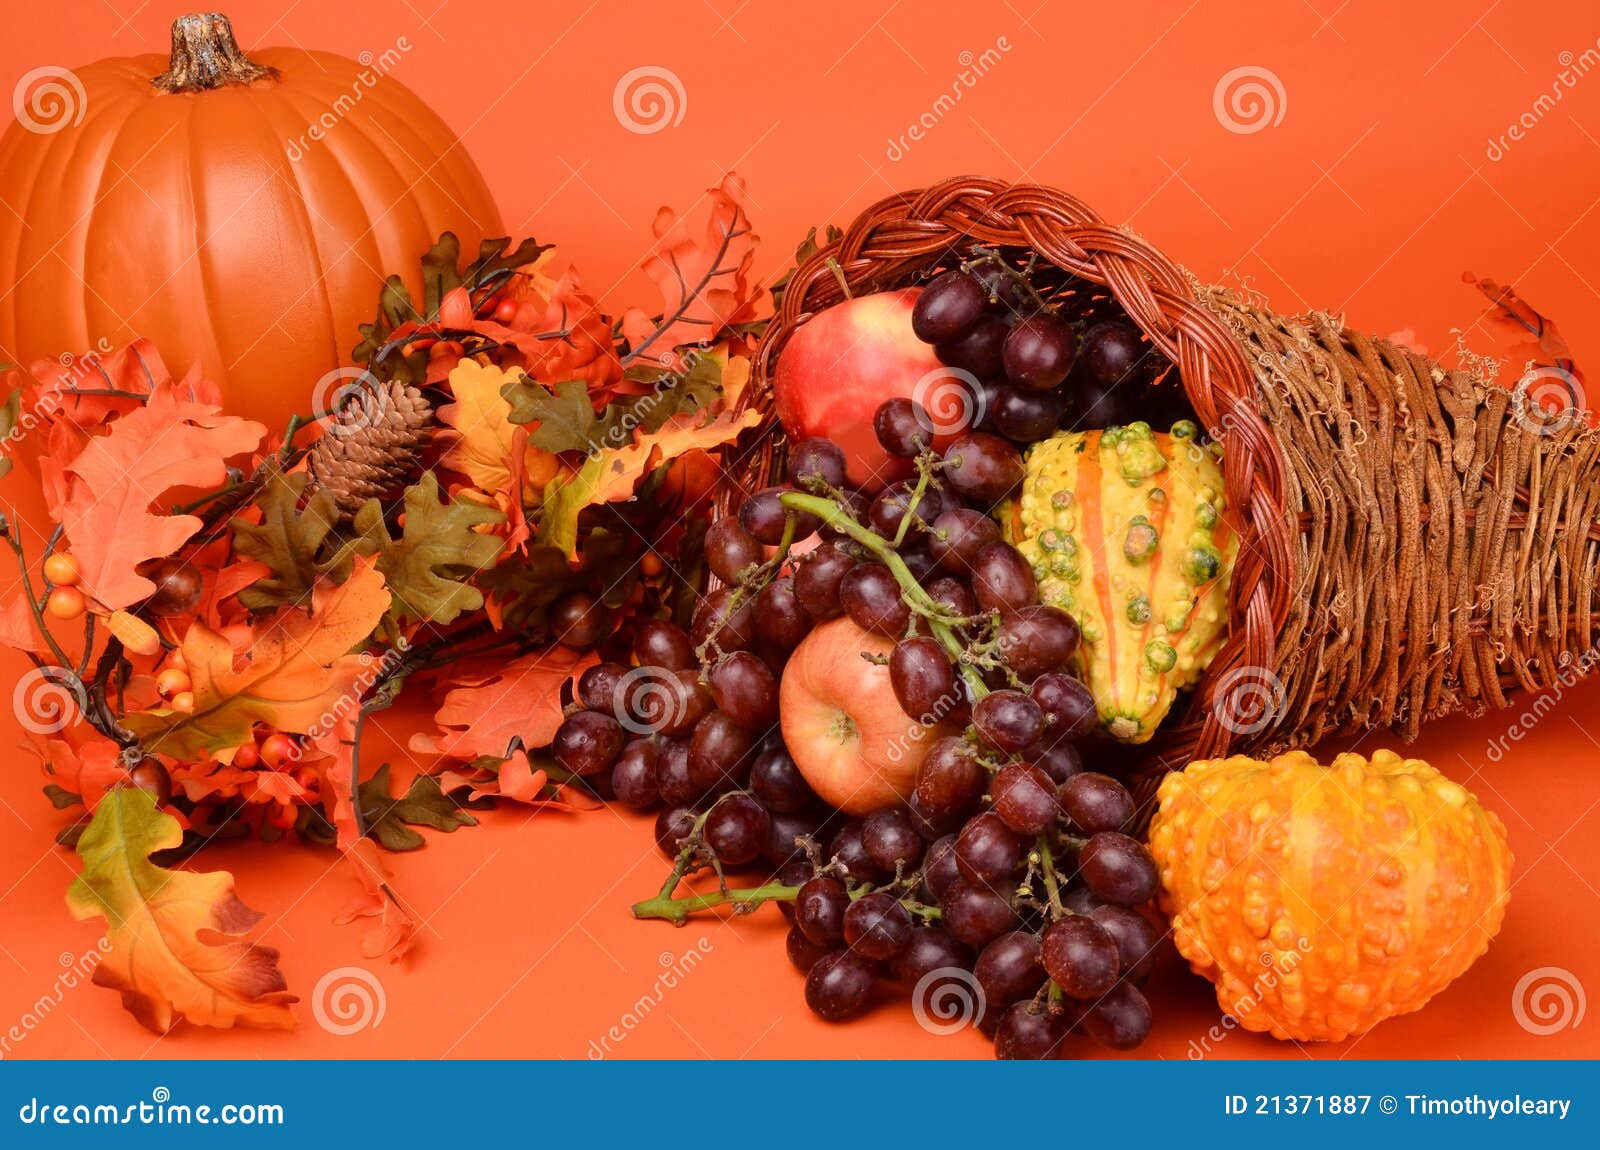 Thanksgiving Cornucopia stock image. Image of basket - 21371887